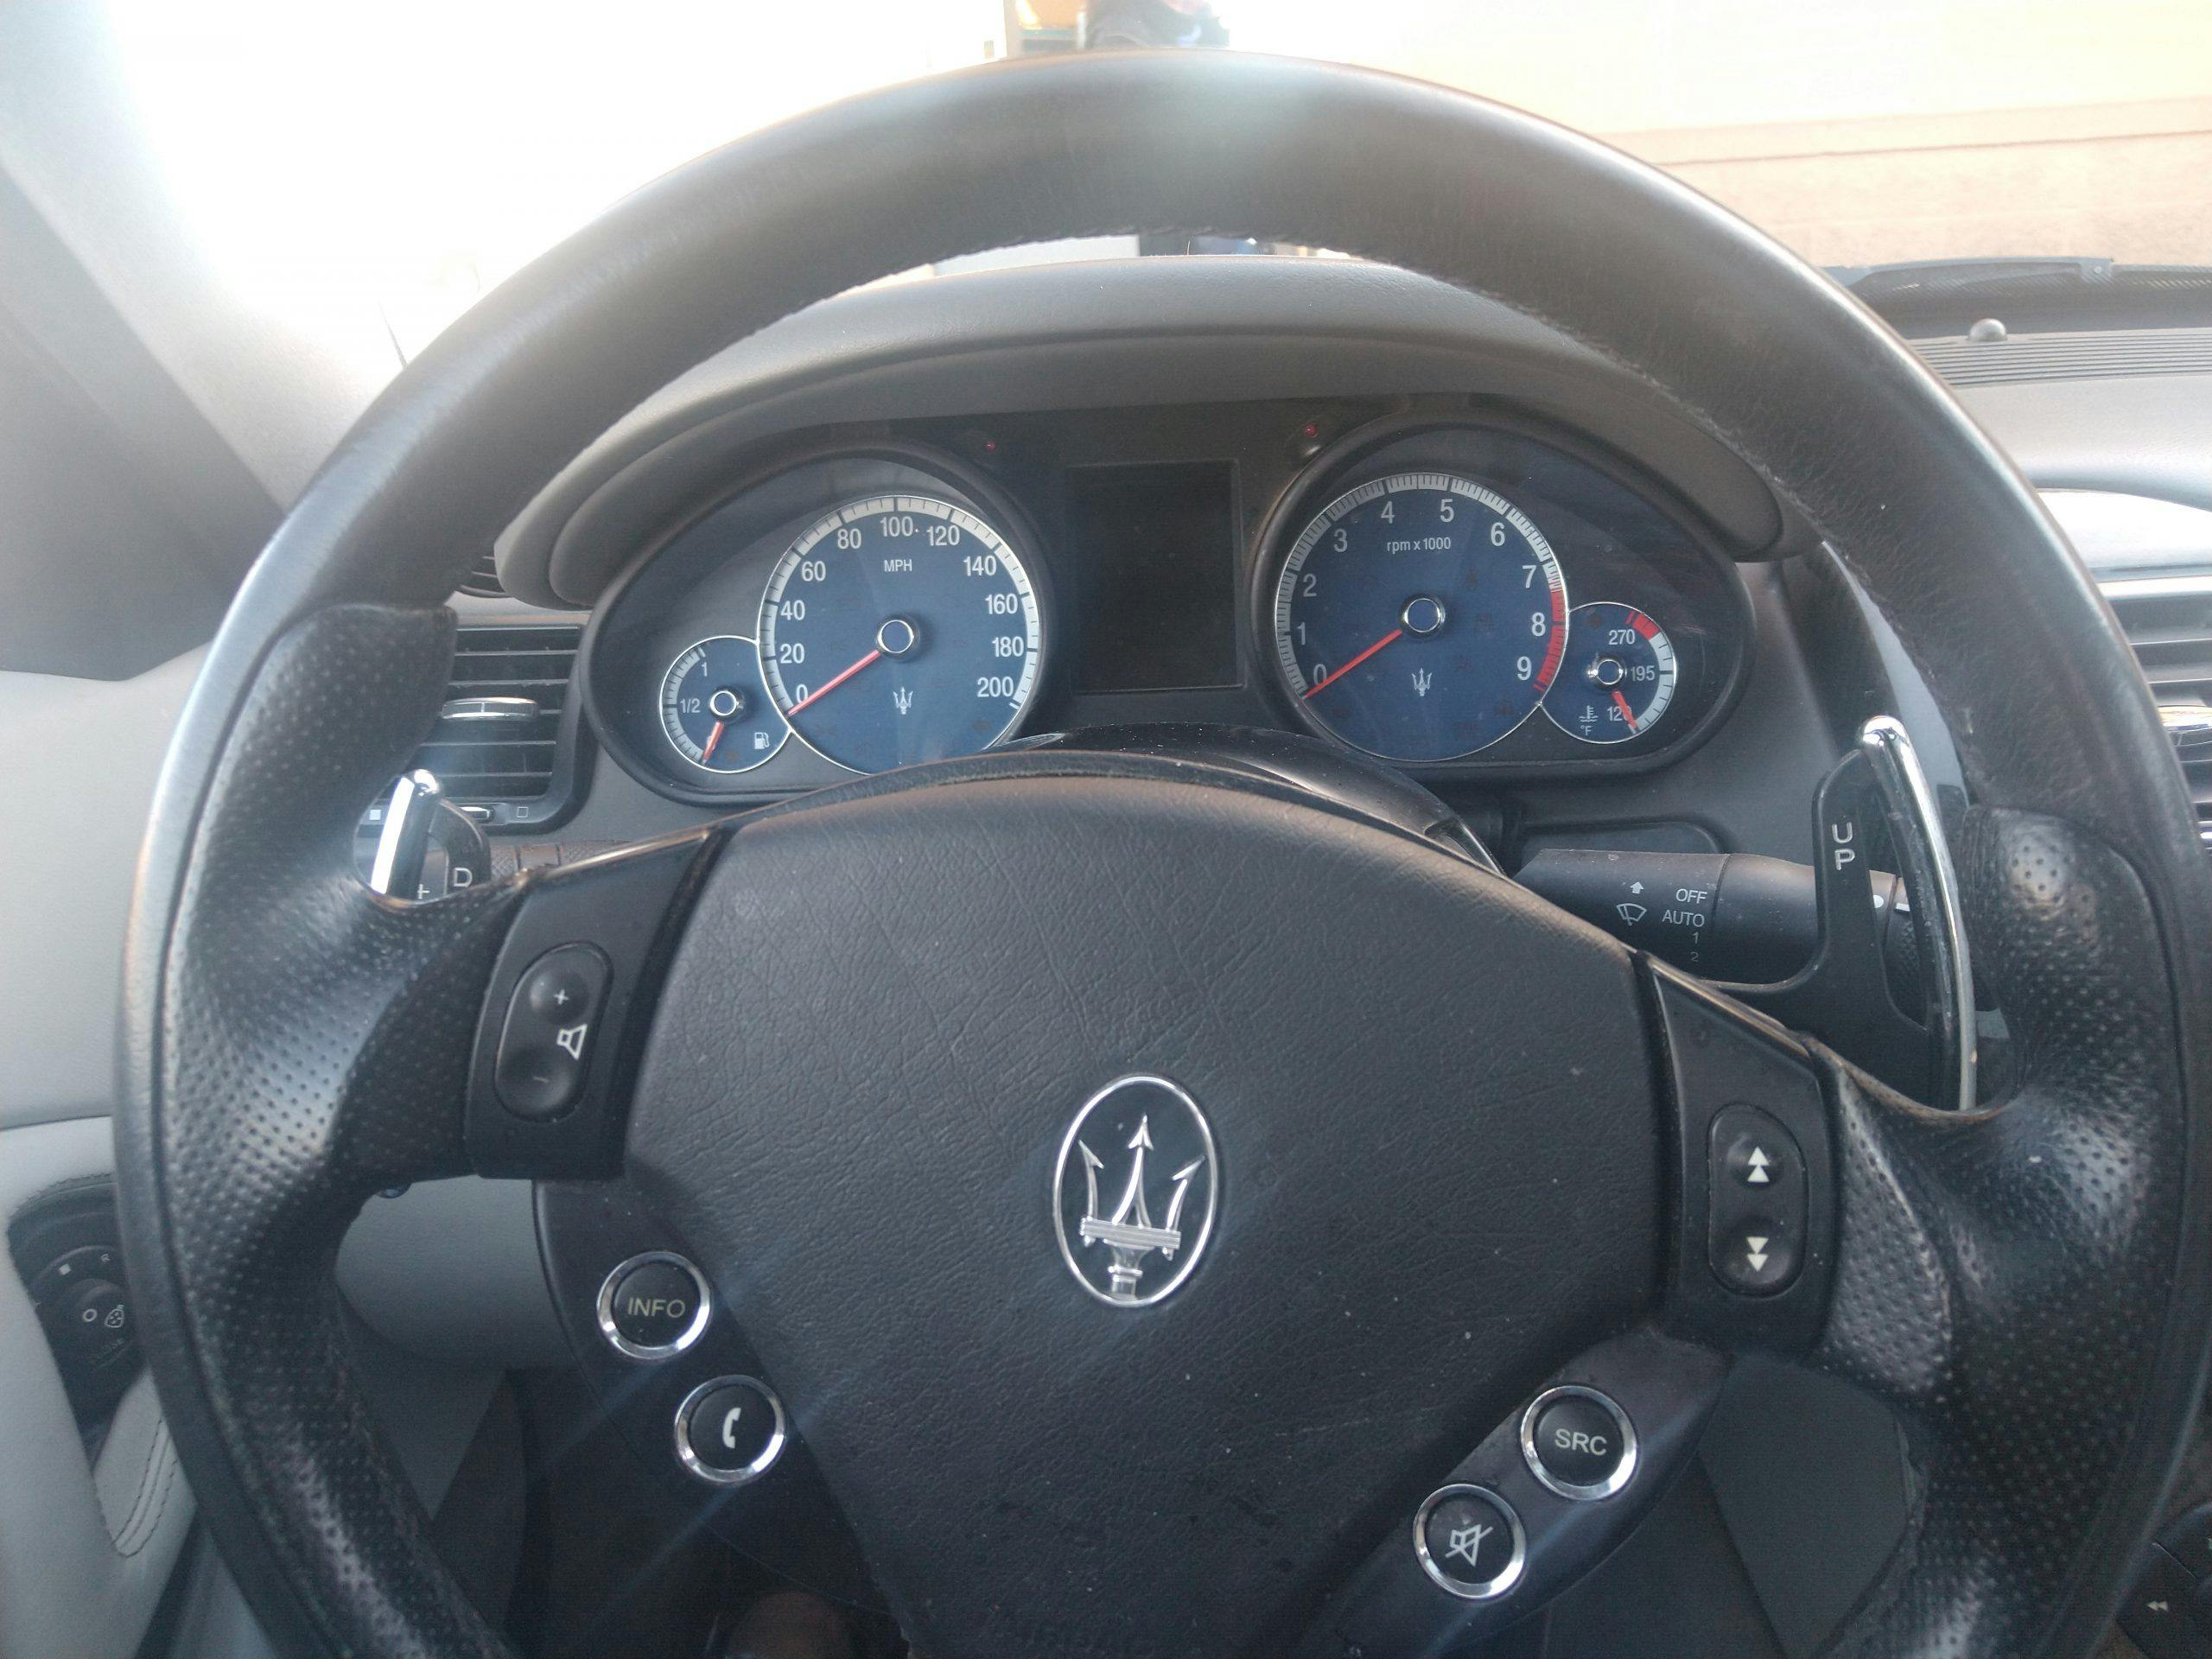 Maserati Quattroporte steering wheel